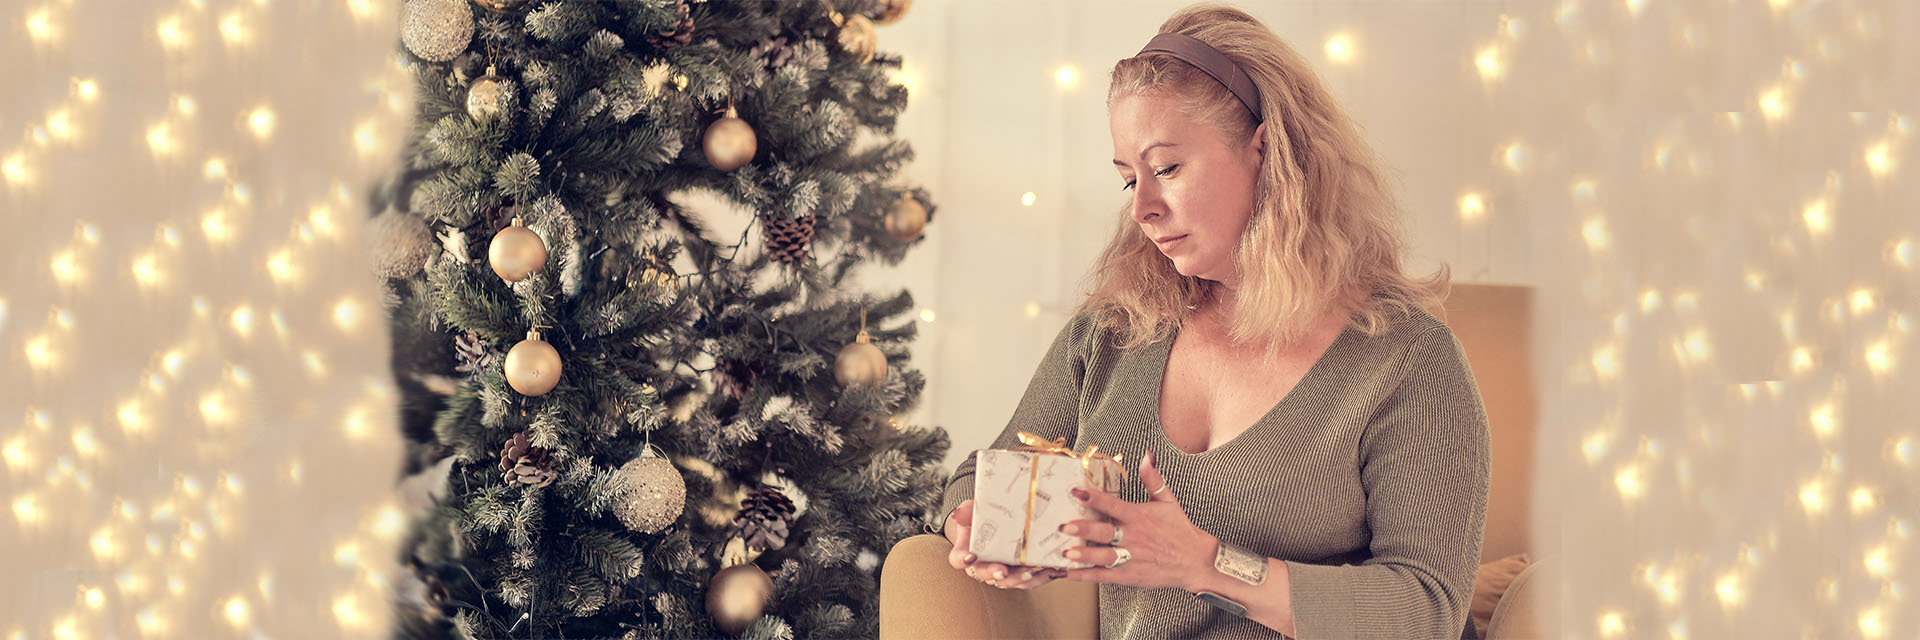 Sad woman near a Christmas tree holding a small gift